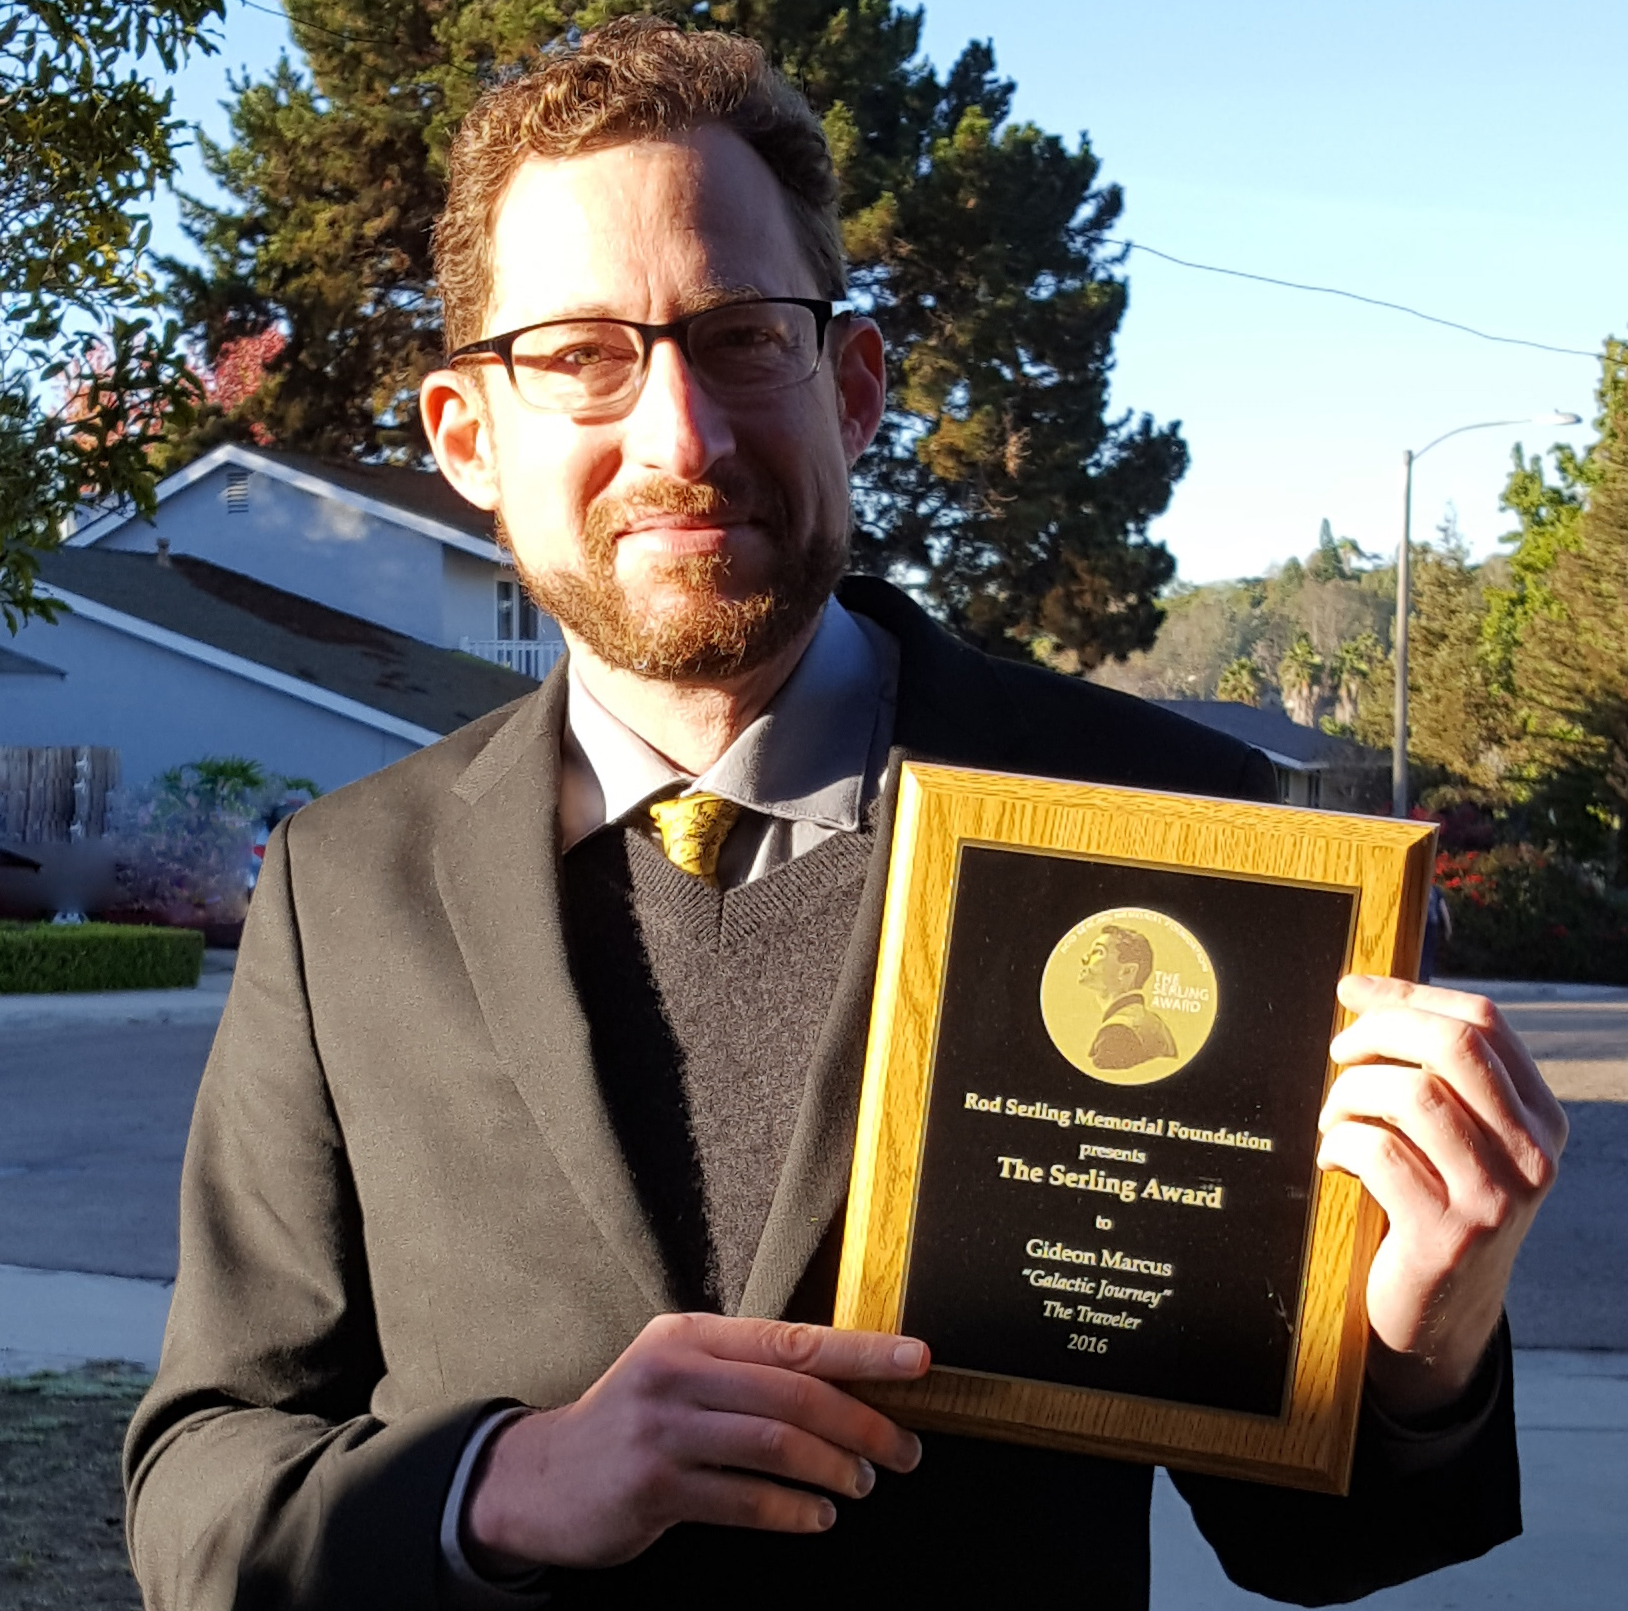 Gideon Marcus and his Serling Award, 2016